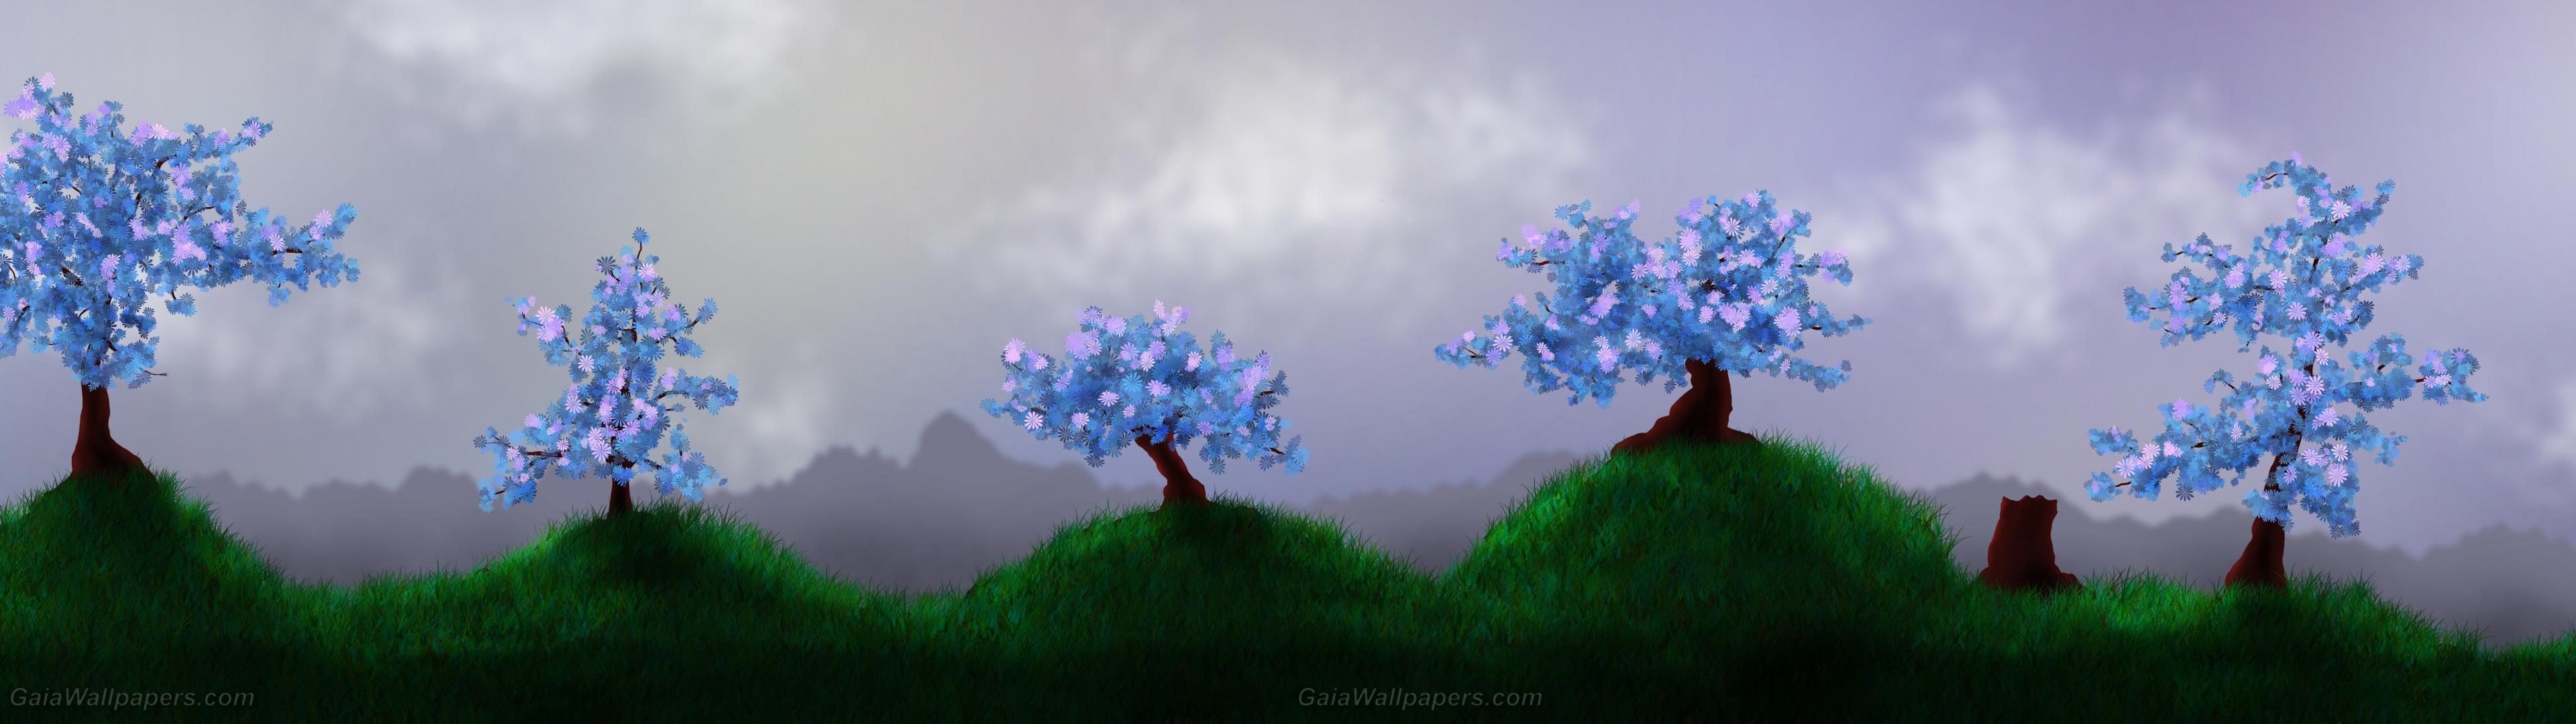 Trees in bloom in a world of serenity wallpaper 3840x1080 Desktop Wallpaper